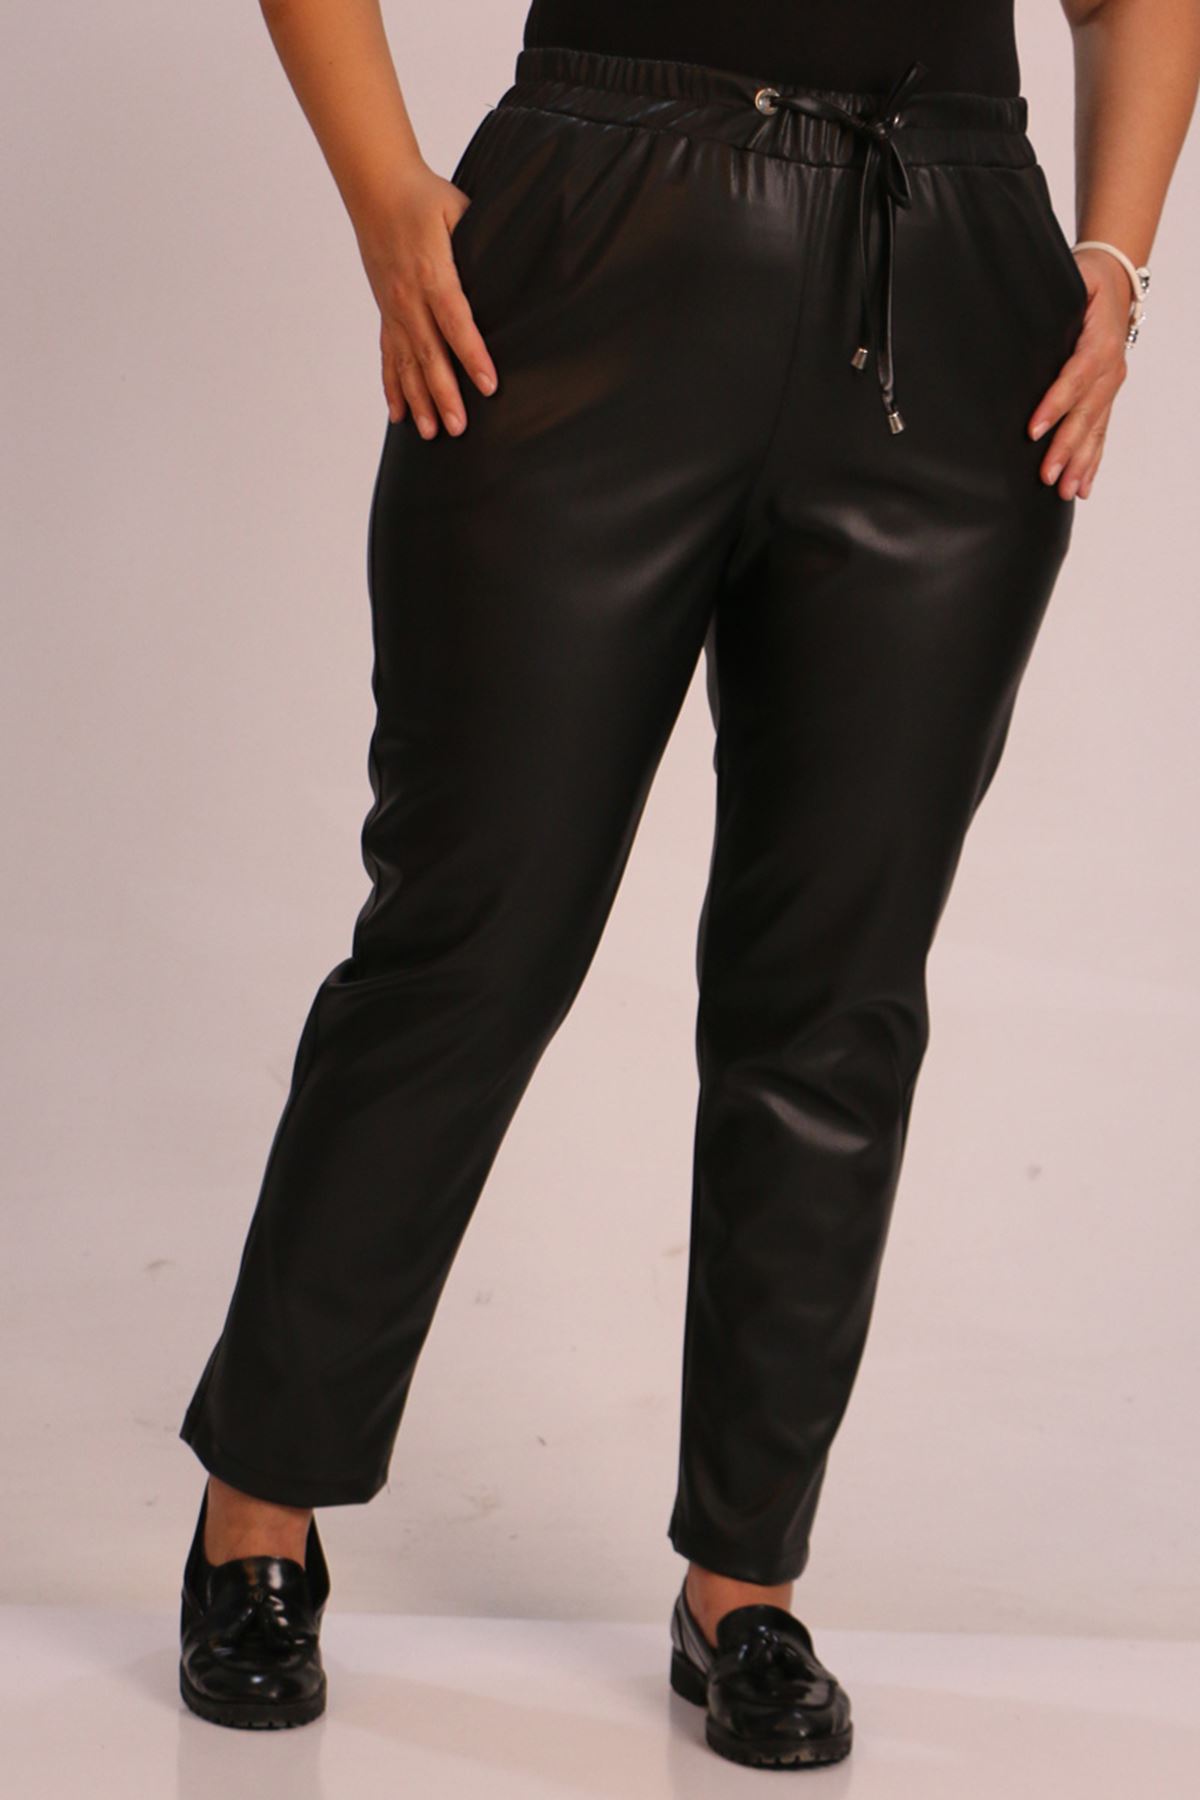 39039 Large Size Elastic Waist Leather Trousers-Black